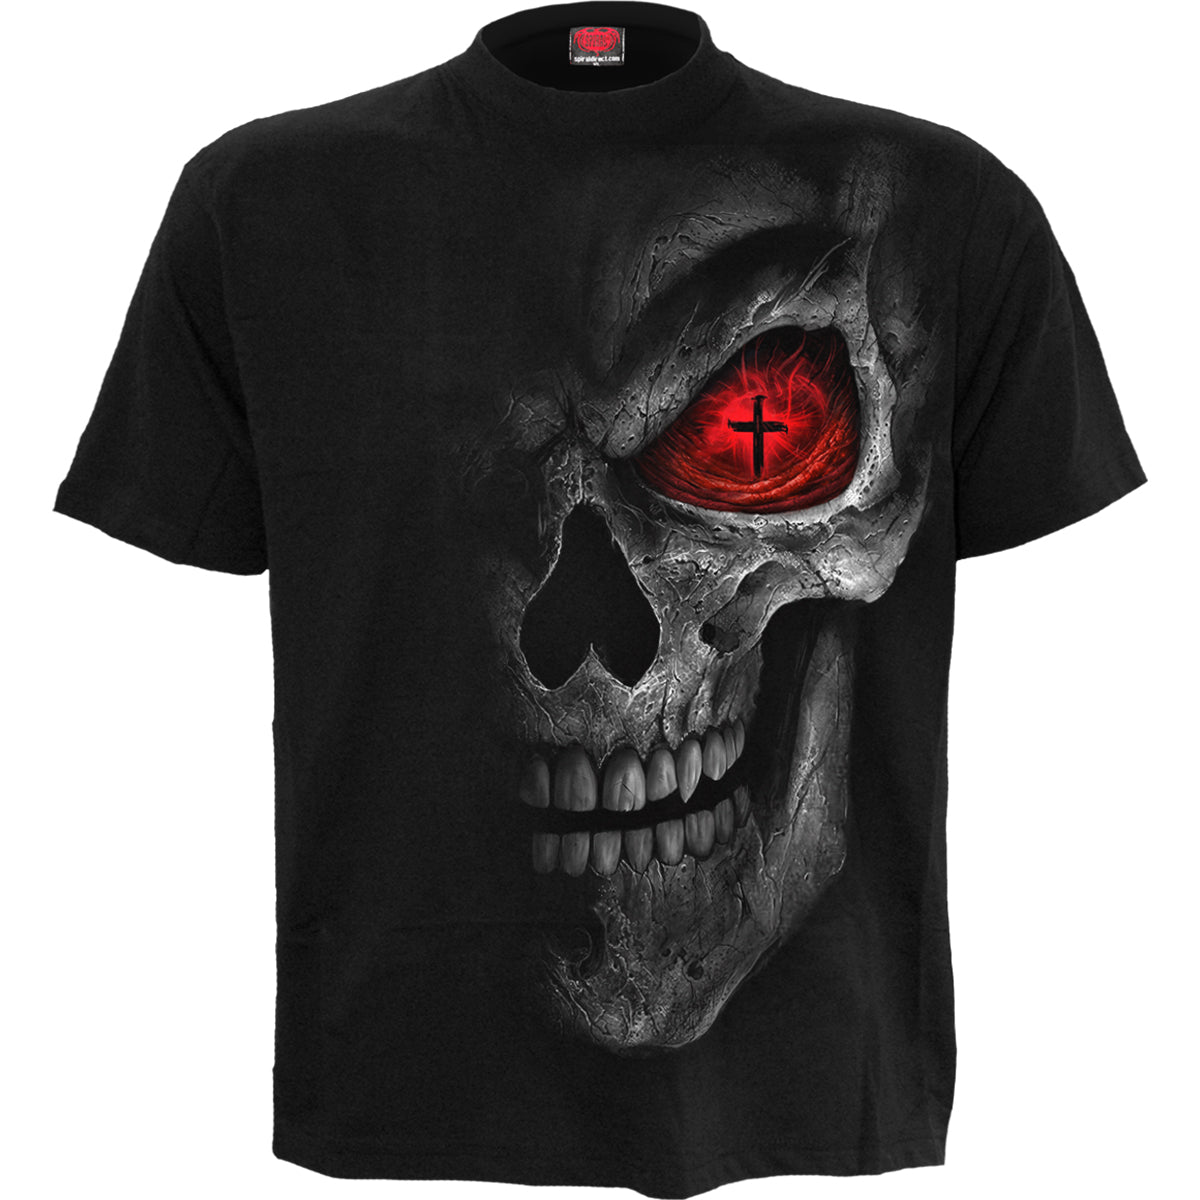 DEATH STARE - T-Shirt Black